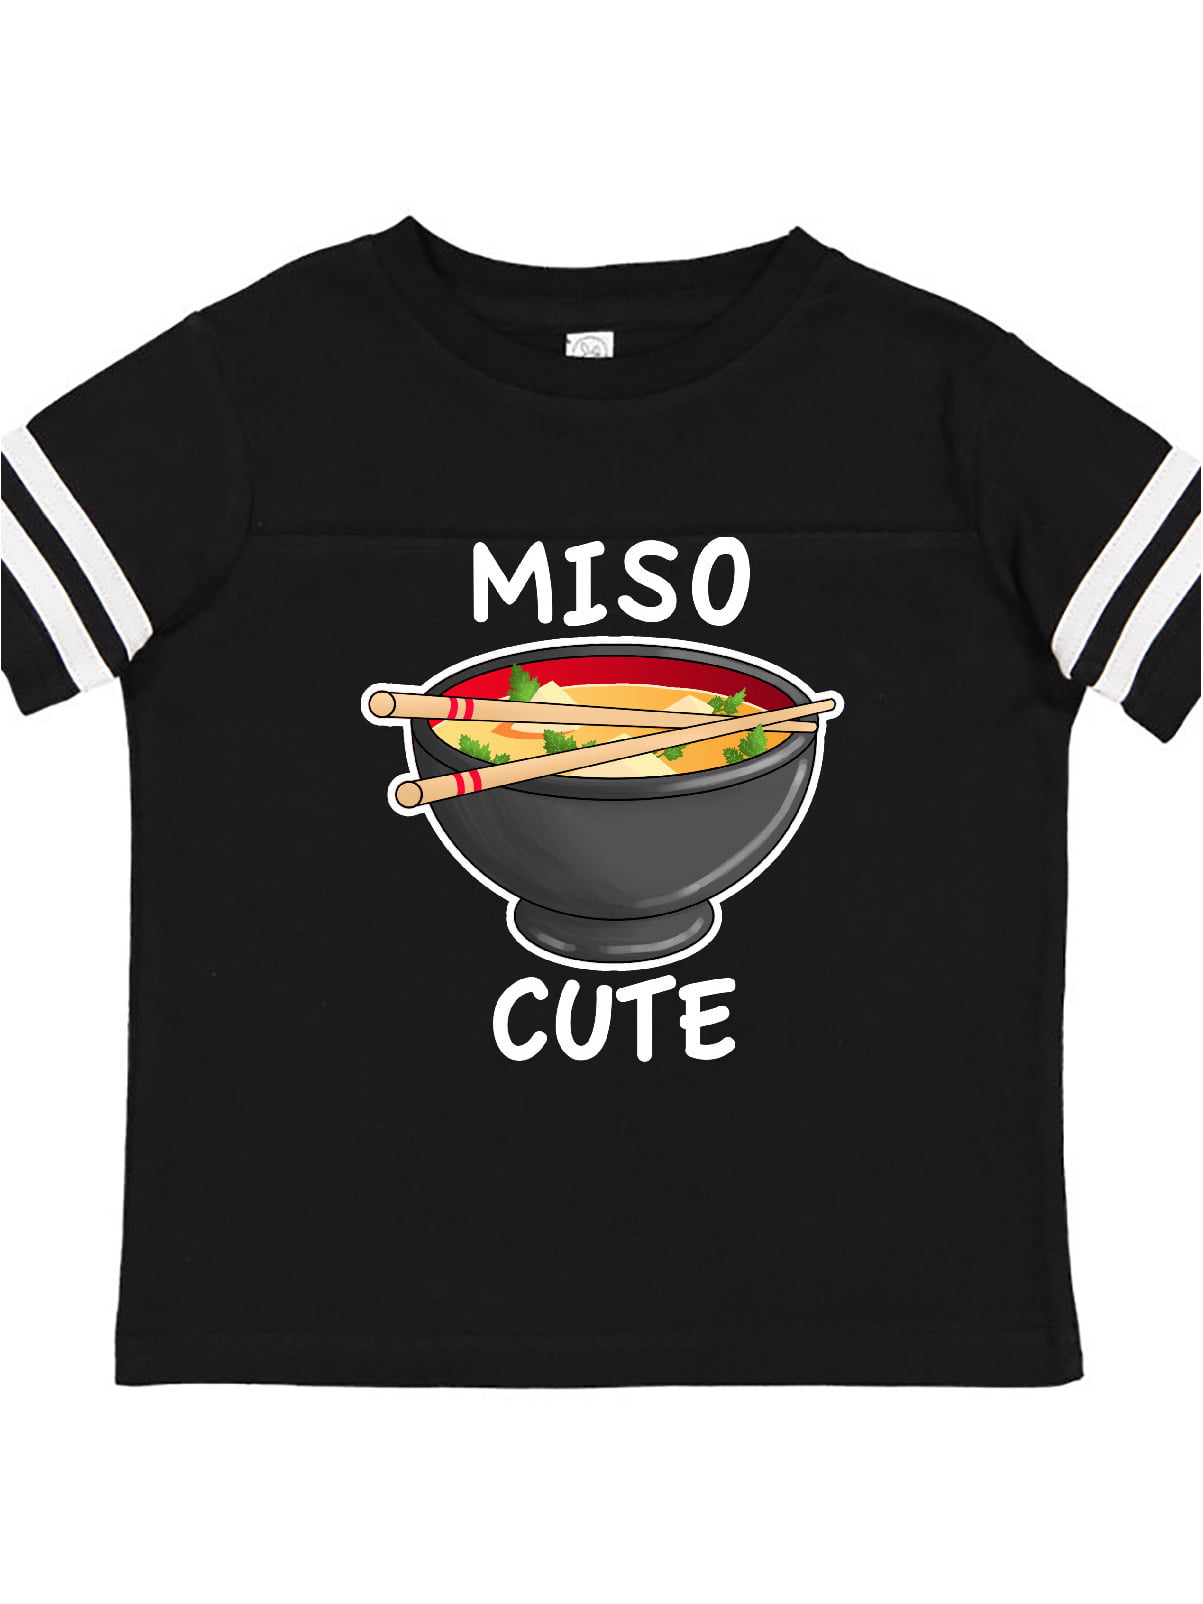 Miso Cute with Miso Soup Toddler T-Shirt - Walmart.com - Walmart.com